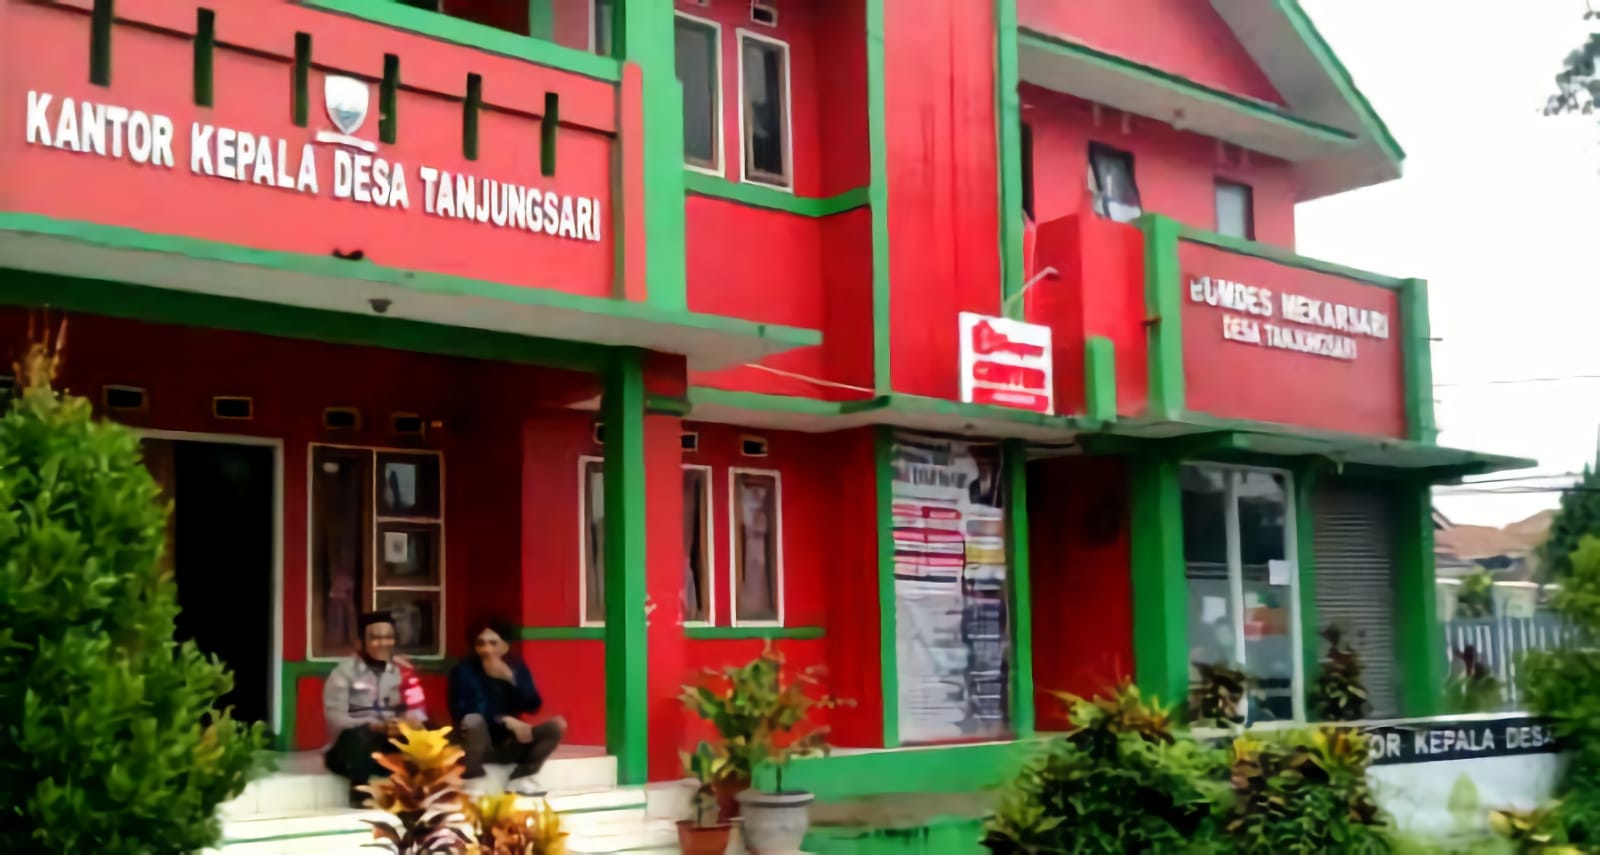 Ilustrasi BUMDes: Kantor BUMDes Mekarsari milik Desa Tanjungsari (ujung kanan) yang bersebelah dengan Kantor Desa Tanjungsari, Kecamatan Tanjungsari, Kabupaten Sumedang. (Jabar Ekspres)